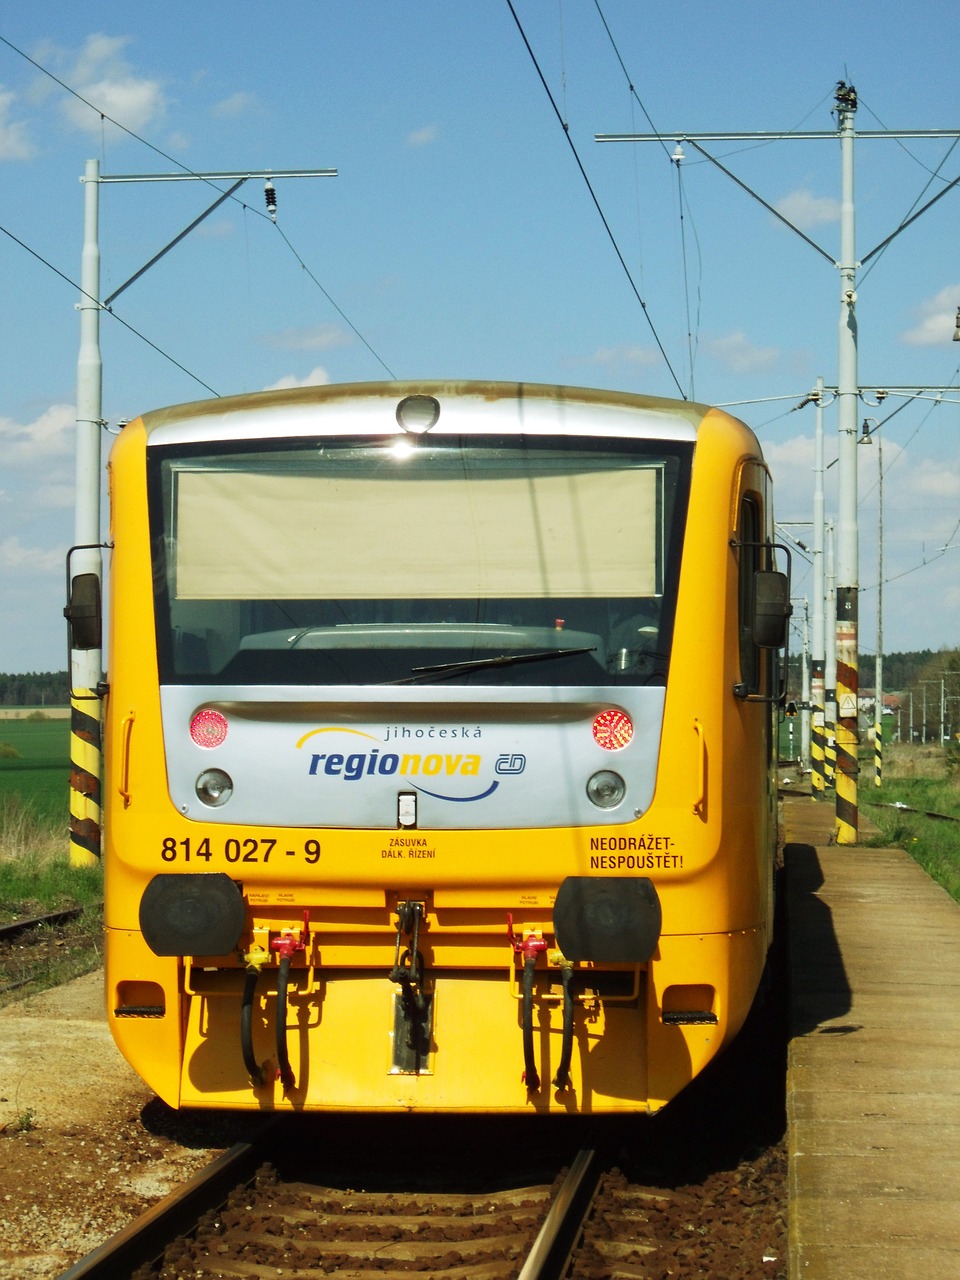 railway yellow railcar free photo